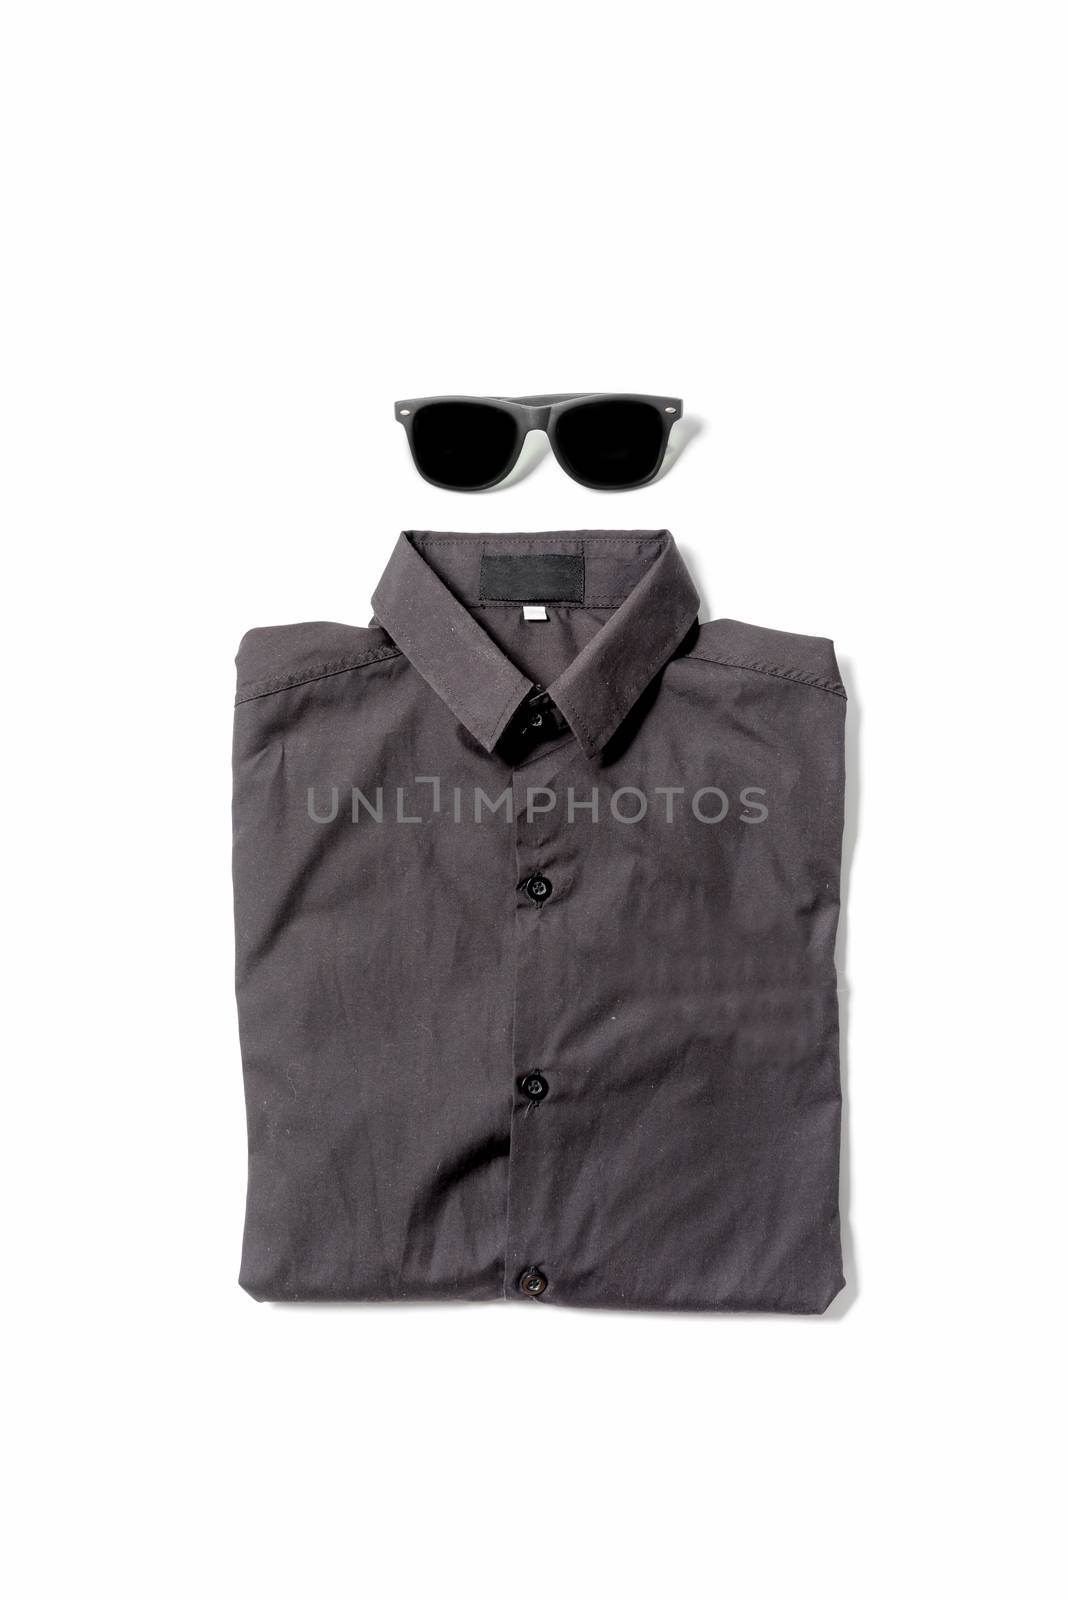 black shirt and sunglasses isolated on white background